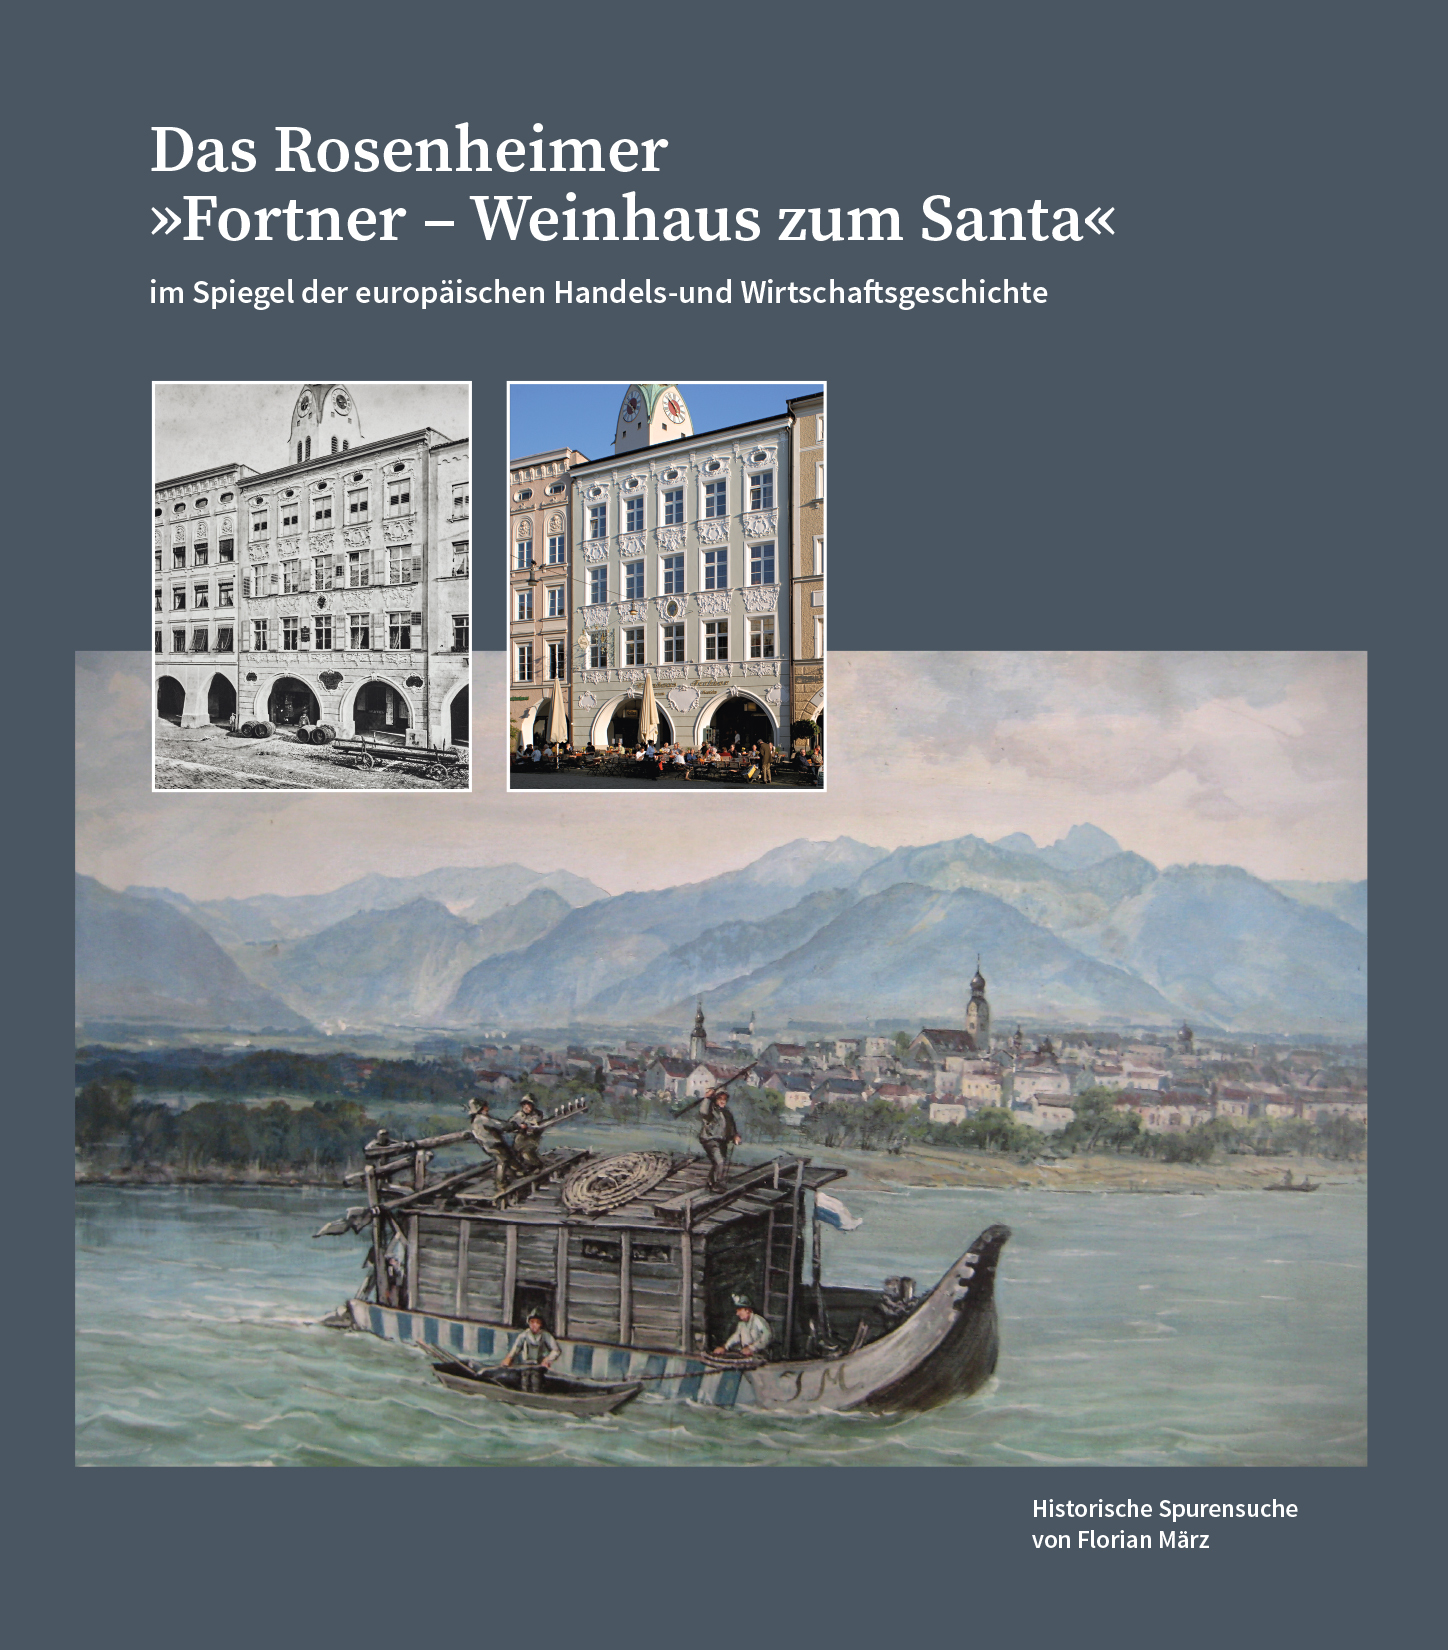 Das Rosenheimer "Fortner – Weinhaus zum Santa"